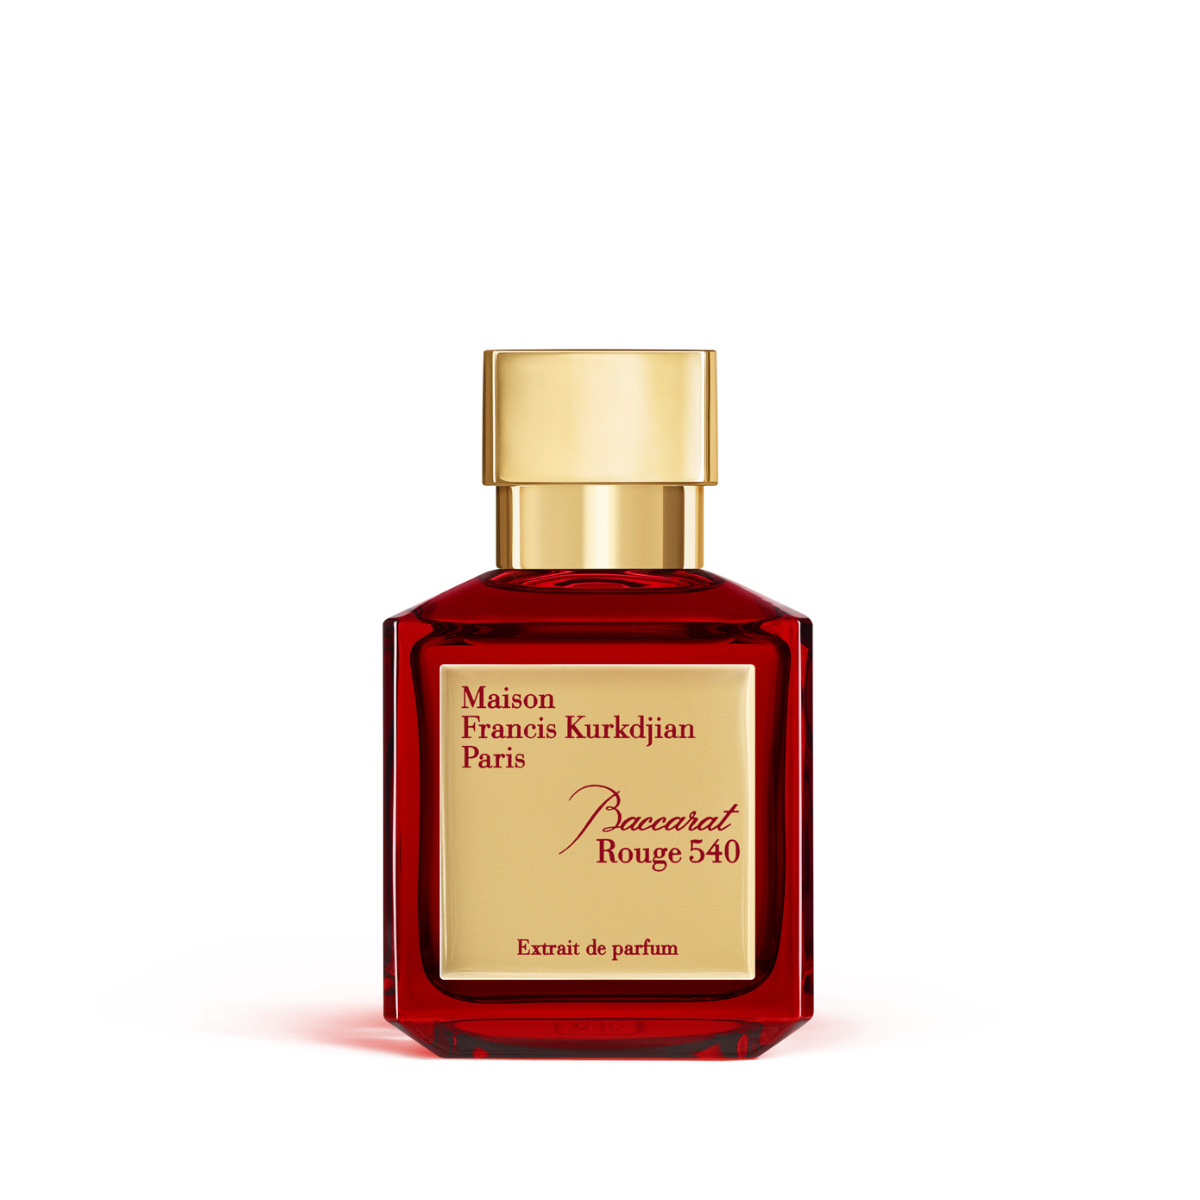 Maison Francis Kurkdjian Presents Its New Baccarat Rouge 540 Creations